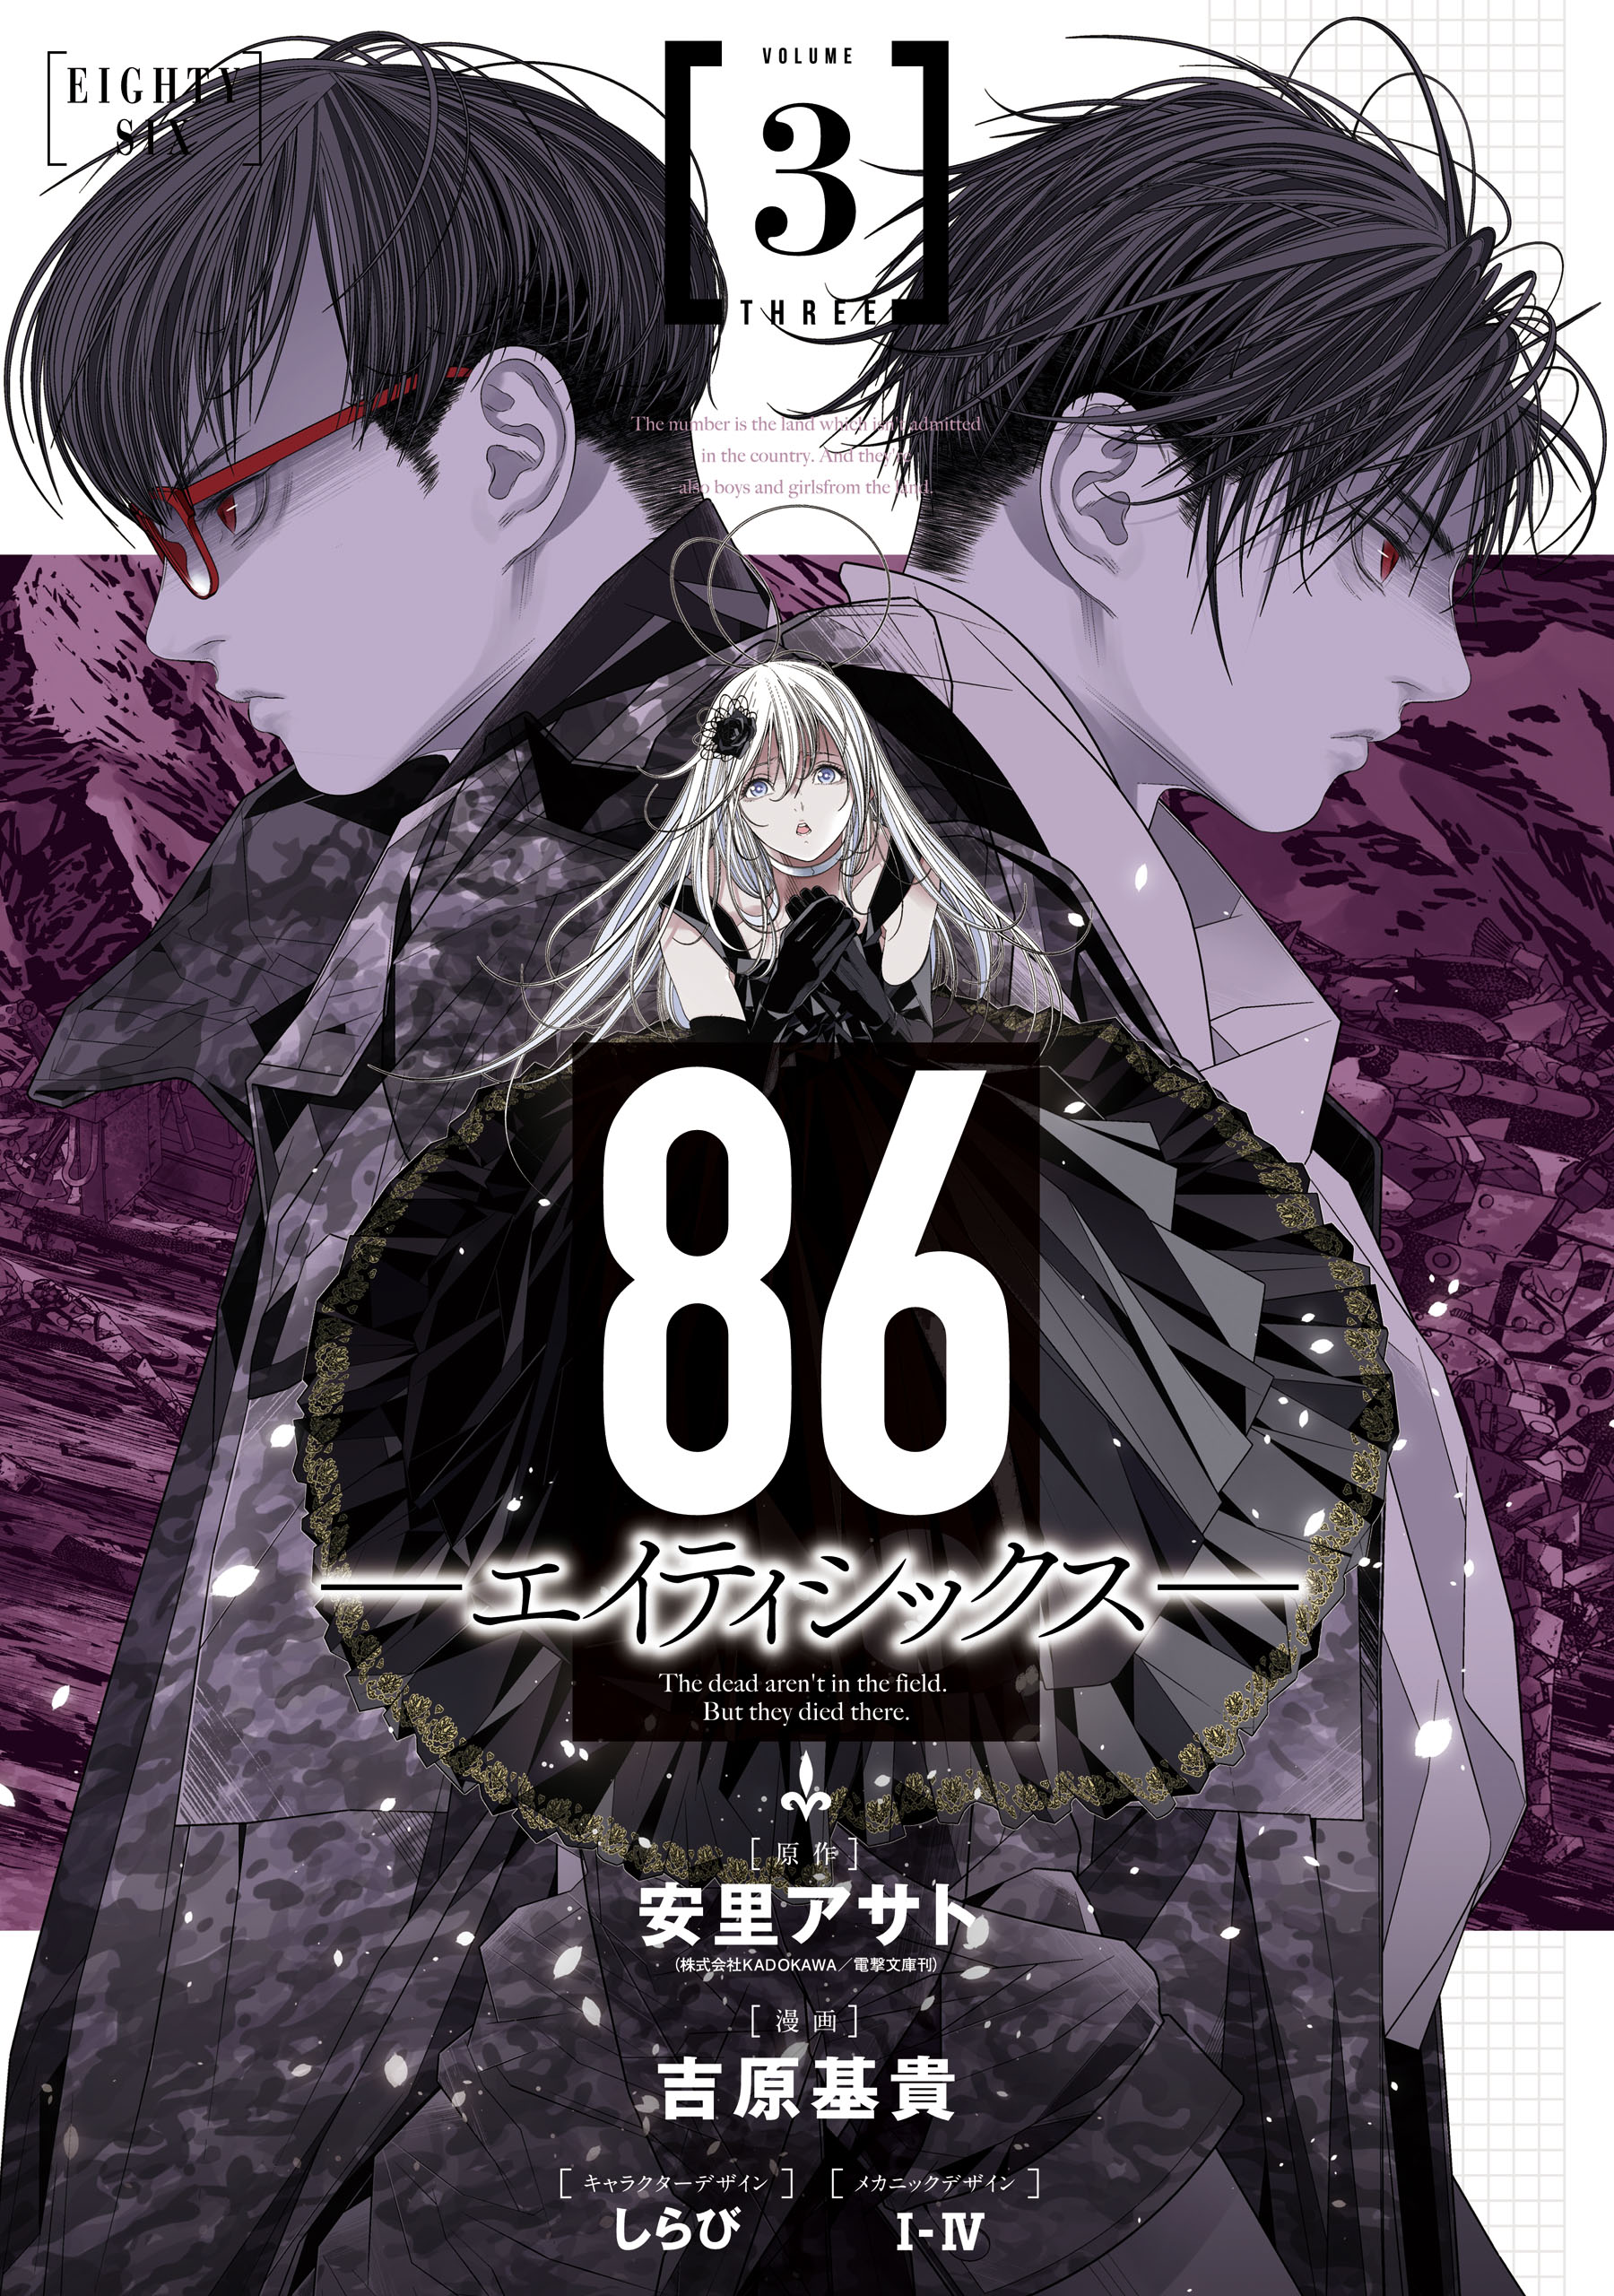 86 Eighty-Six Manga Adaptations Canceled Due to Artists' Health